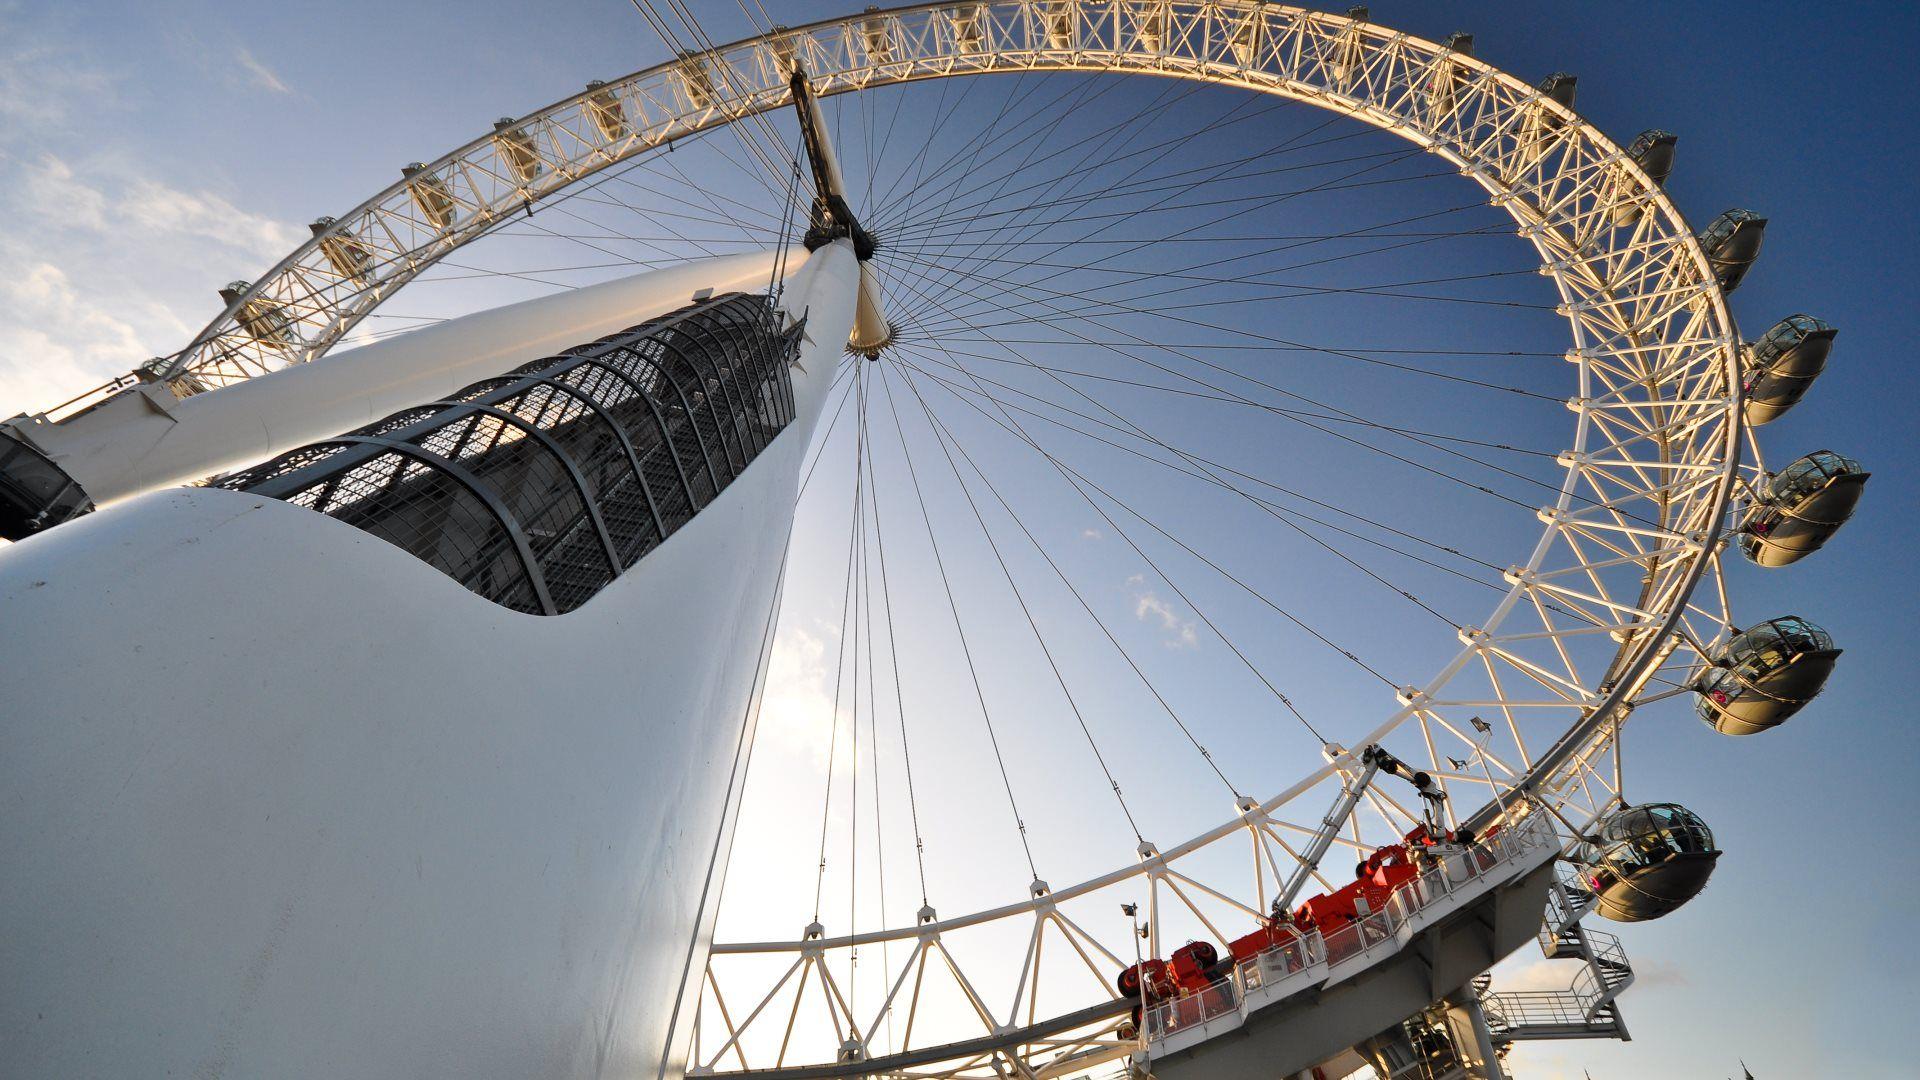 One of the london s. Лондонский глаз London Eye. Лондон колесо обозрения глаз Лондона. Лондонский глаз колесо обозрения Великобритания. London Eye (лондонское колесо обозрения)..